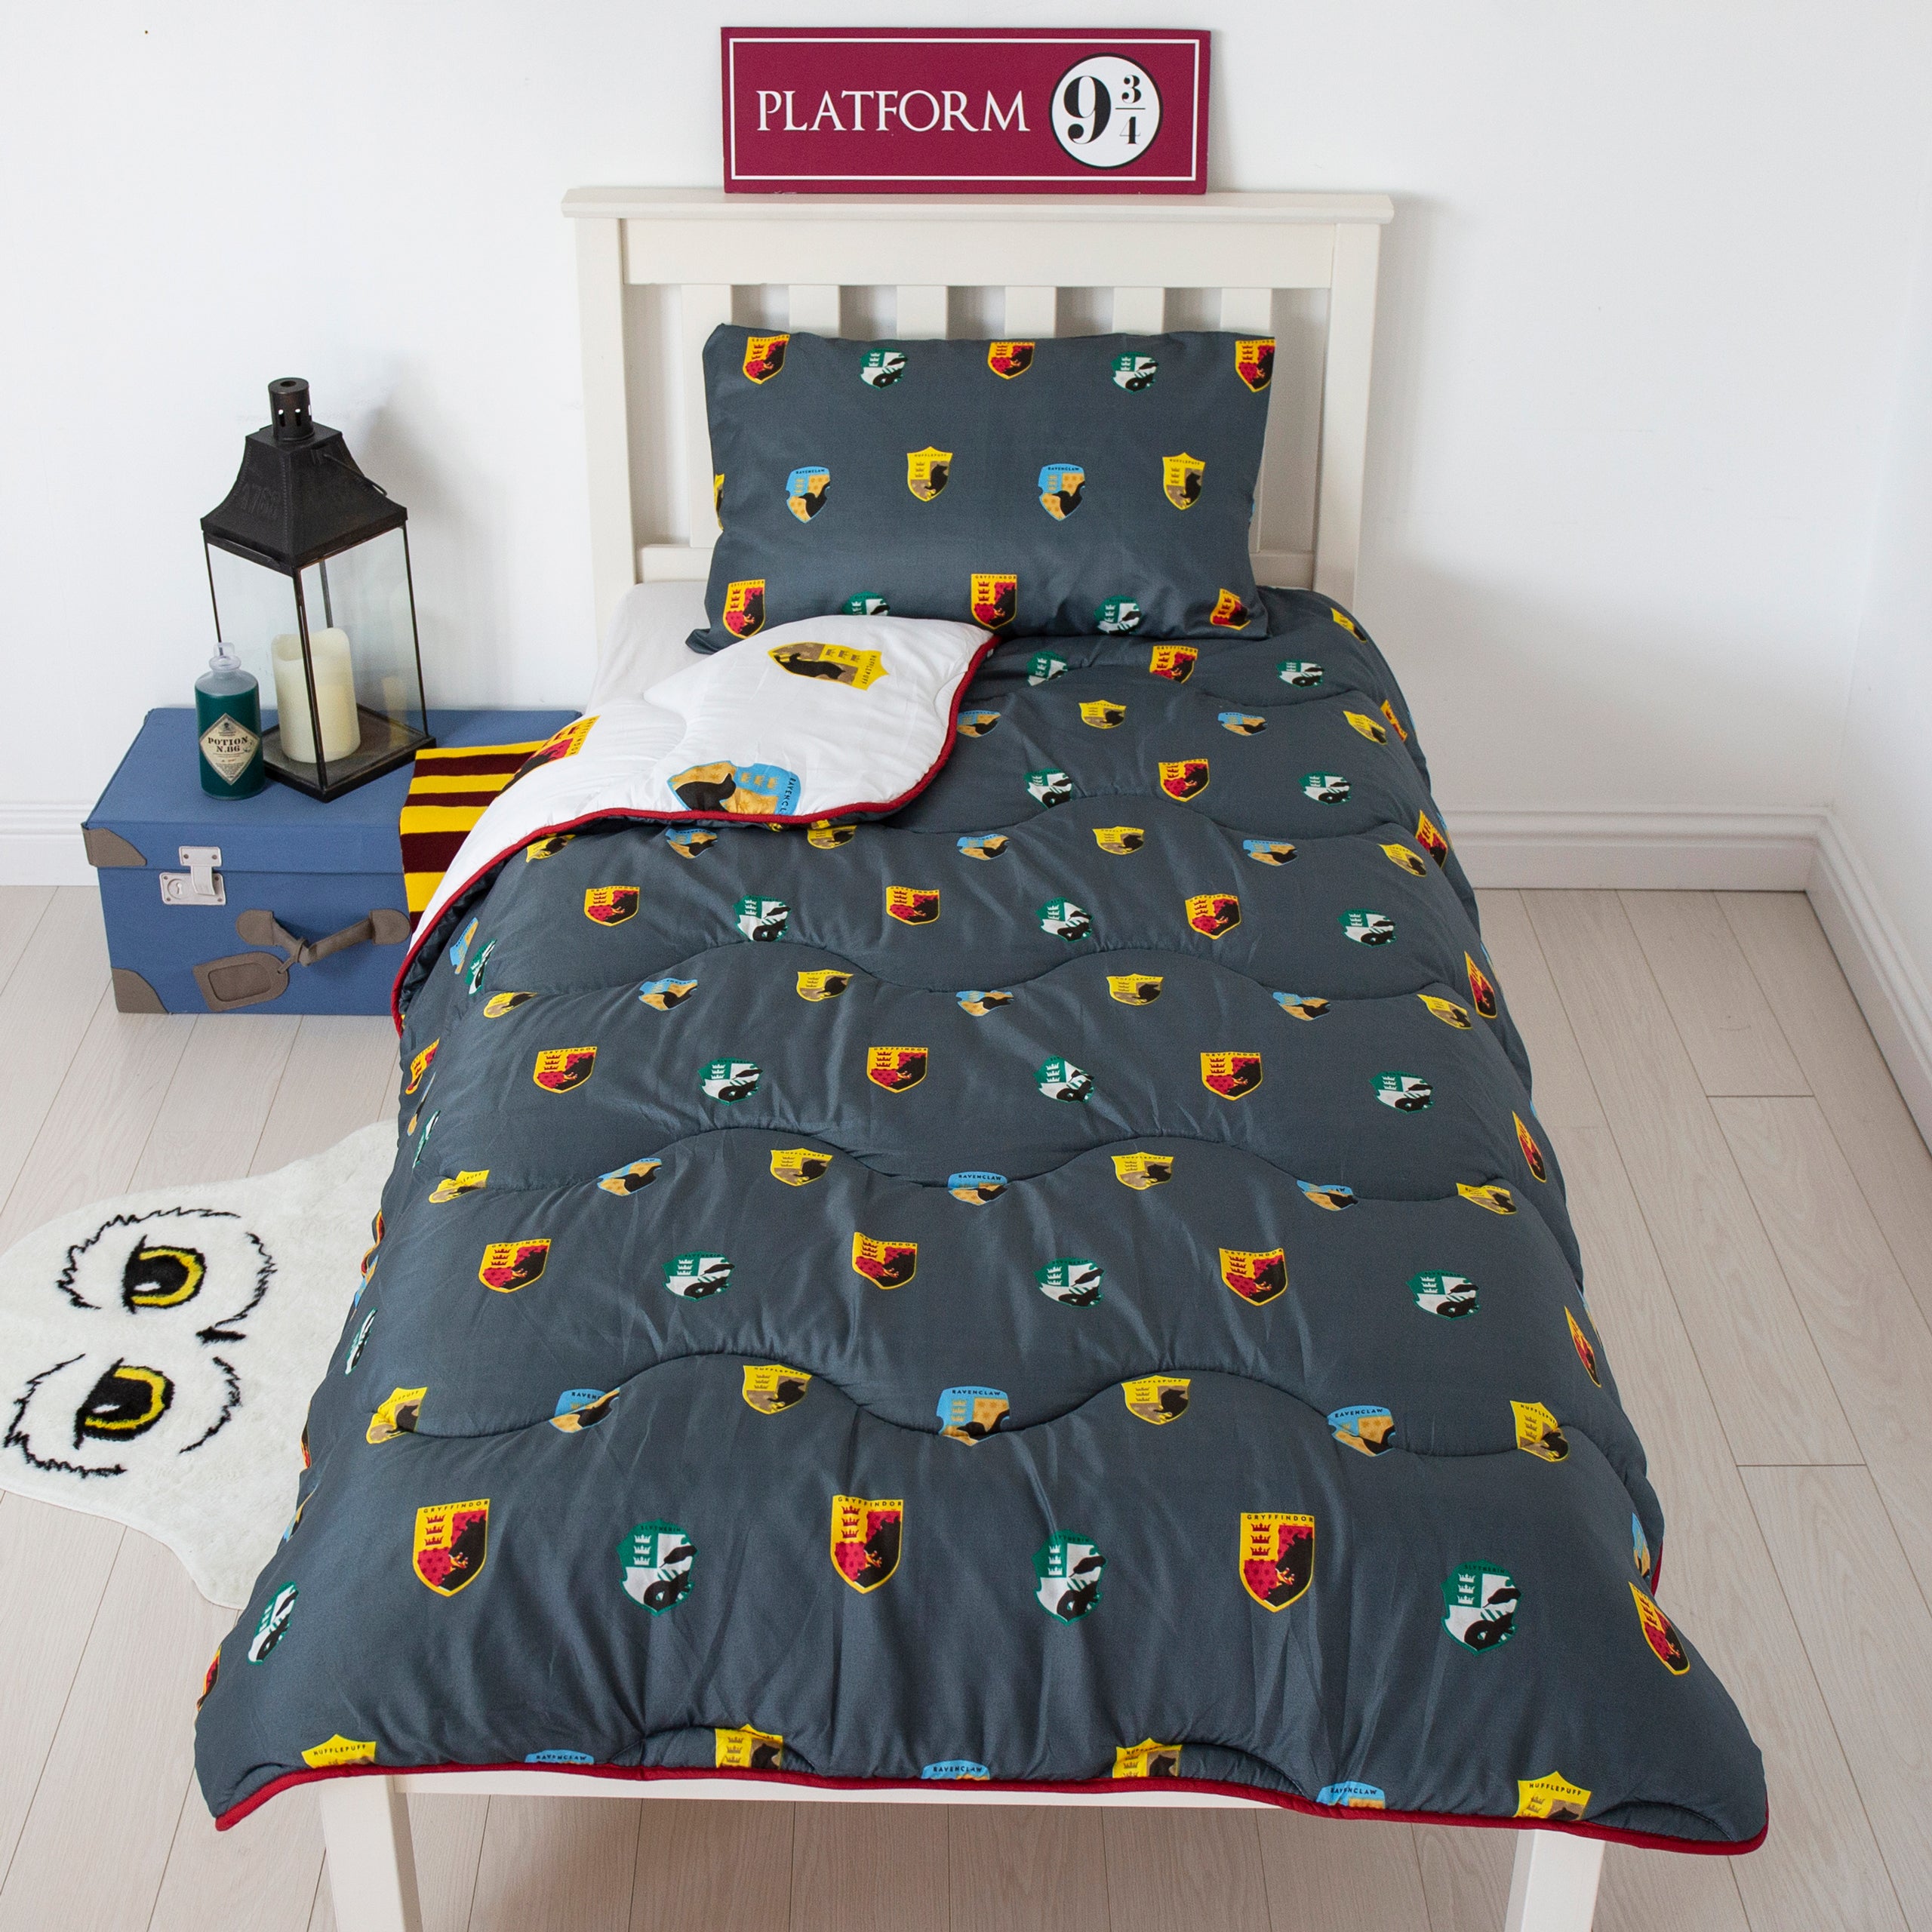 Harry Potter Ravenclaw 3-Piece Bedding Set 90 inchx90 inch Duvet Cover & 2 Pillow Shams Set Soft Bed Sheets, Size: 90 x 90, Black